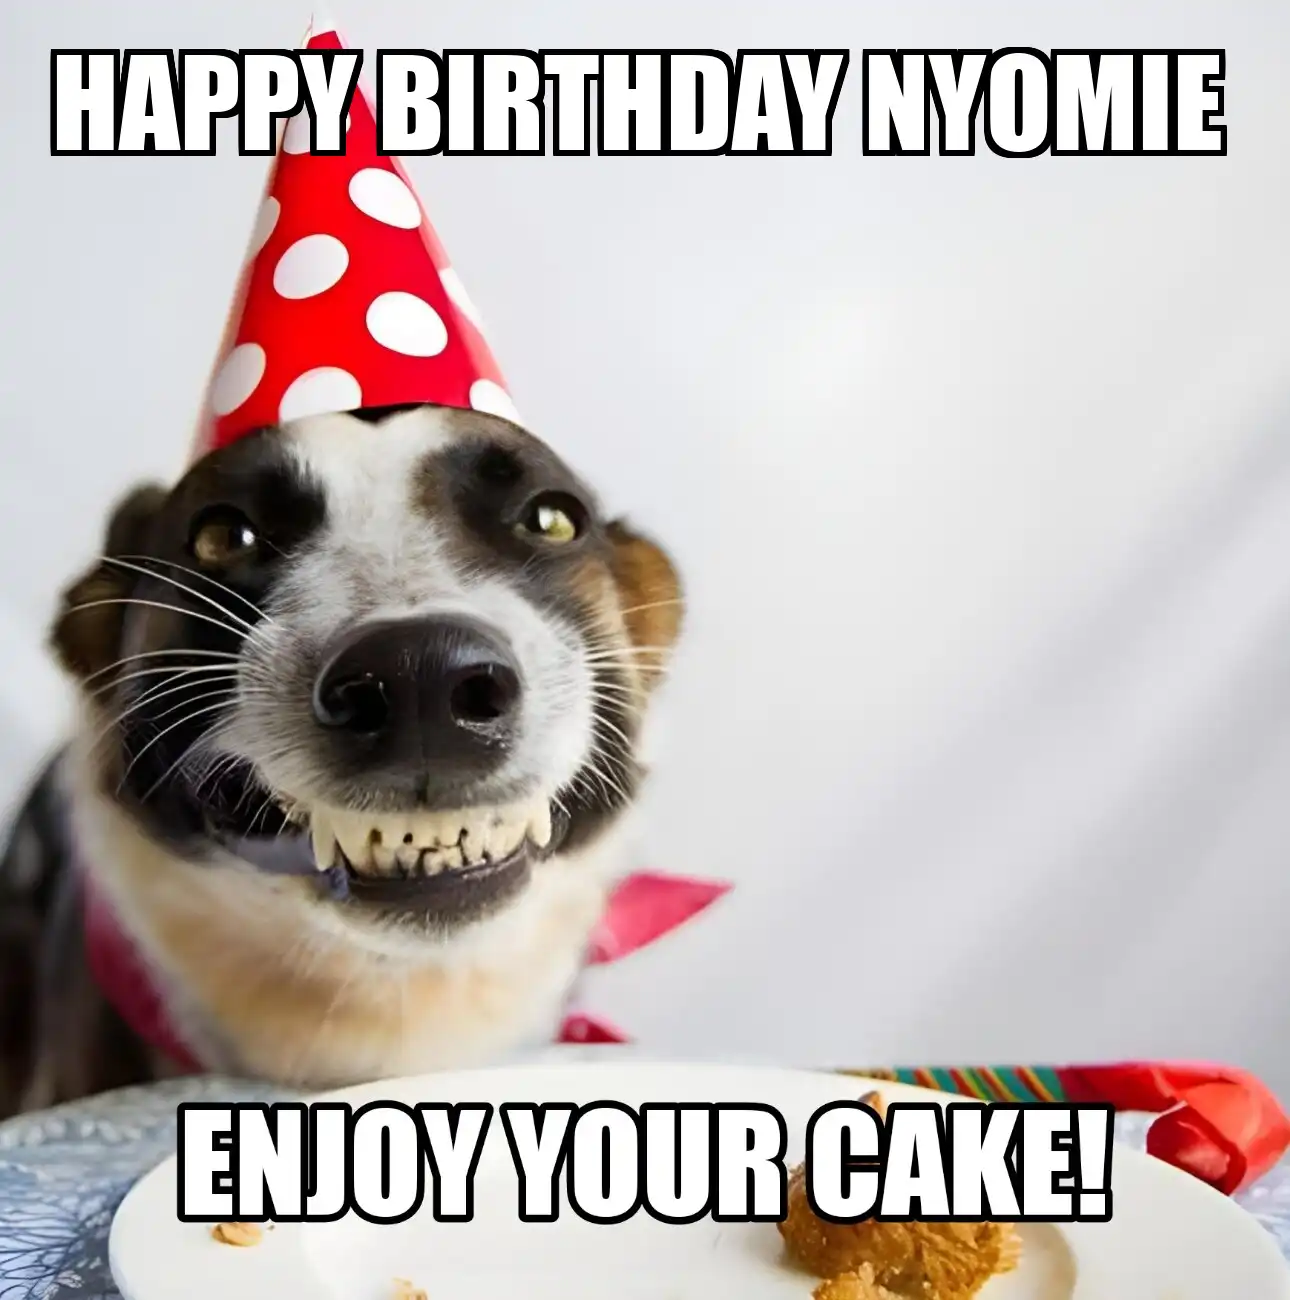 Happy Birthday Nyomie Enjoy Your Cake Dog Meme